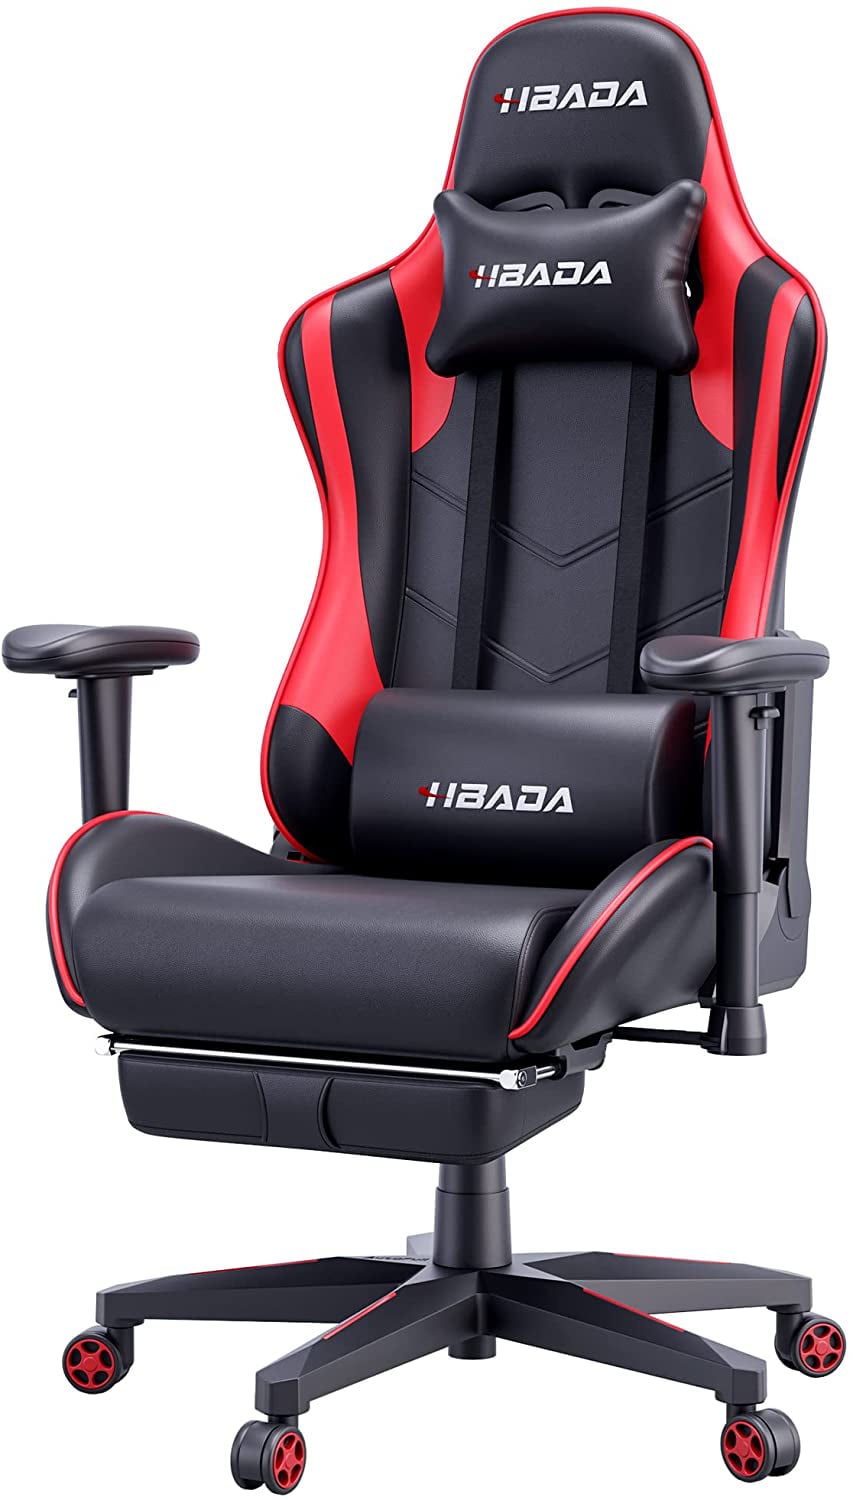 Race Car Style Gaming Office Chair Swivel Chair w/ Adjustable Armrest BK 